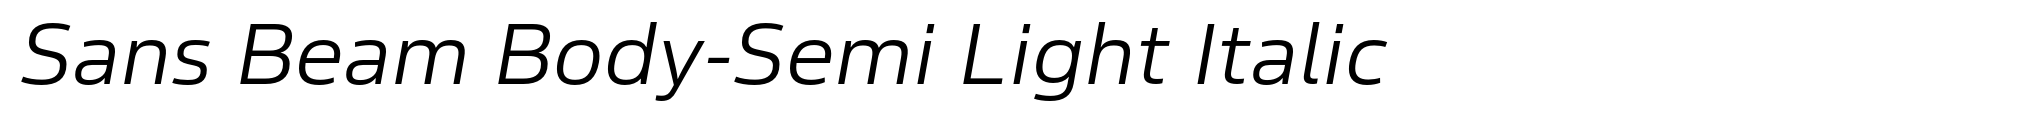 Sans Beam Body-Semi Light Italic image